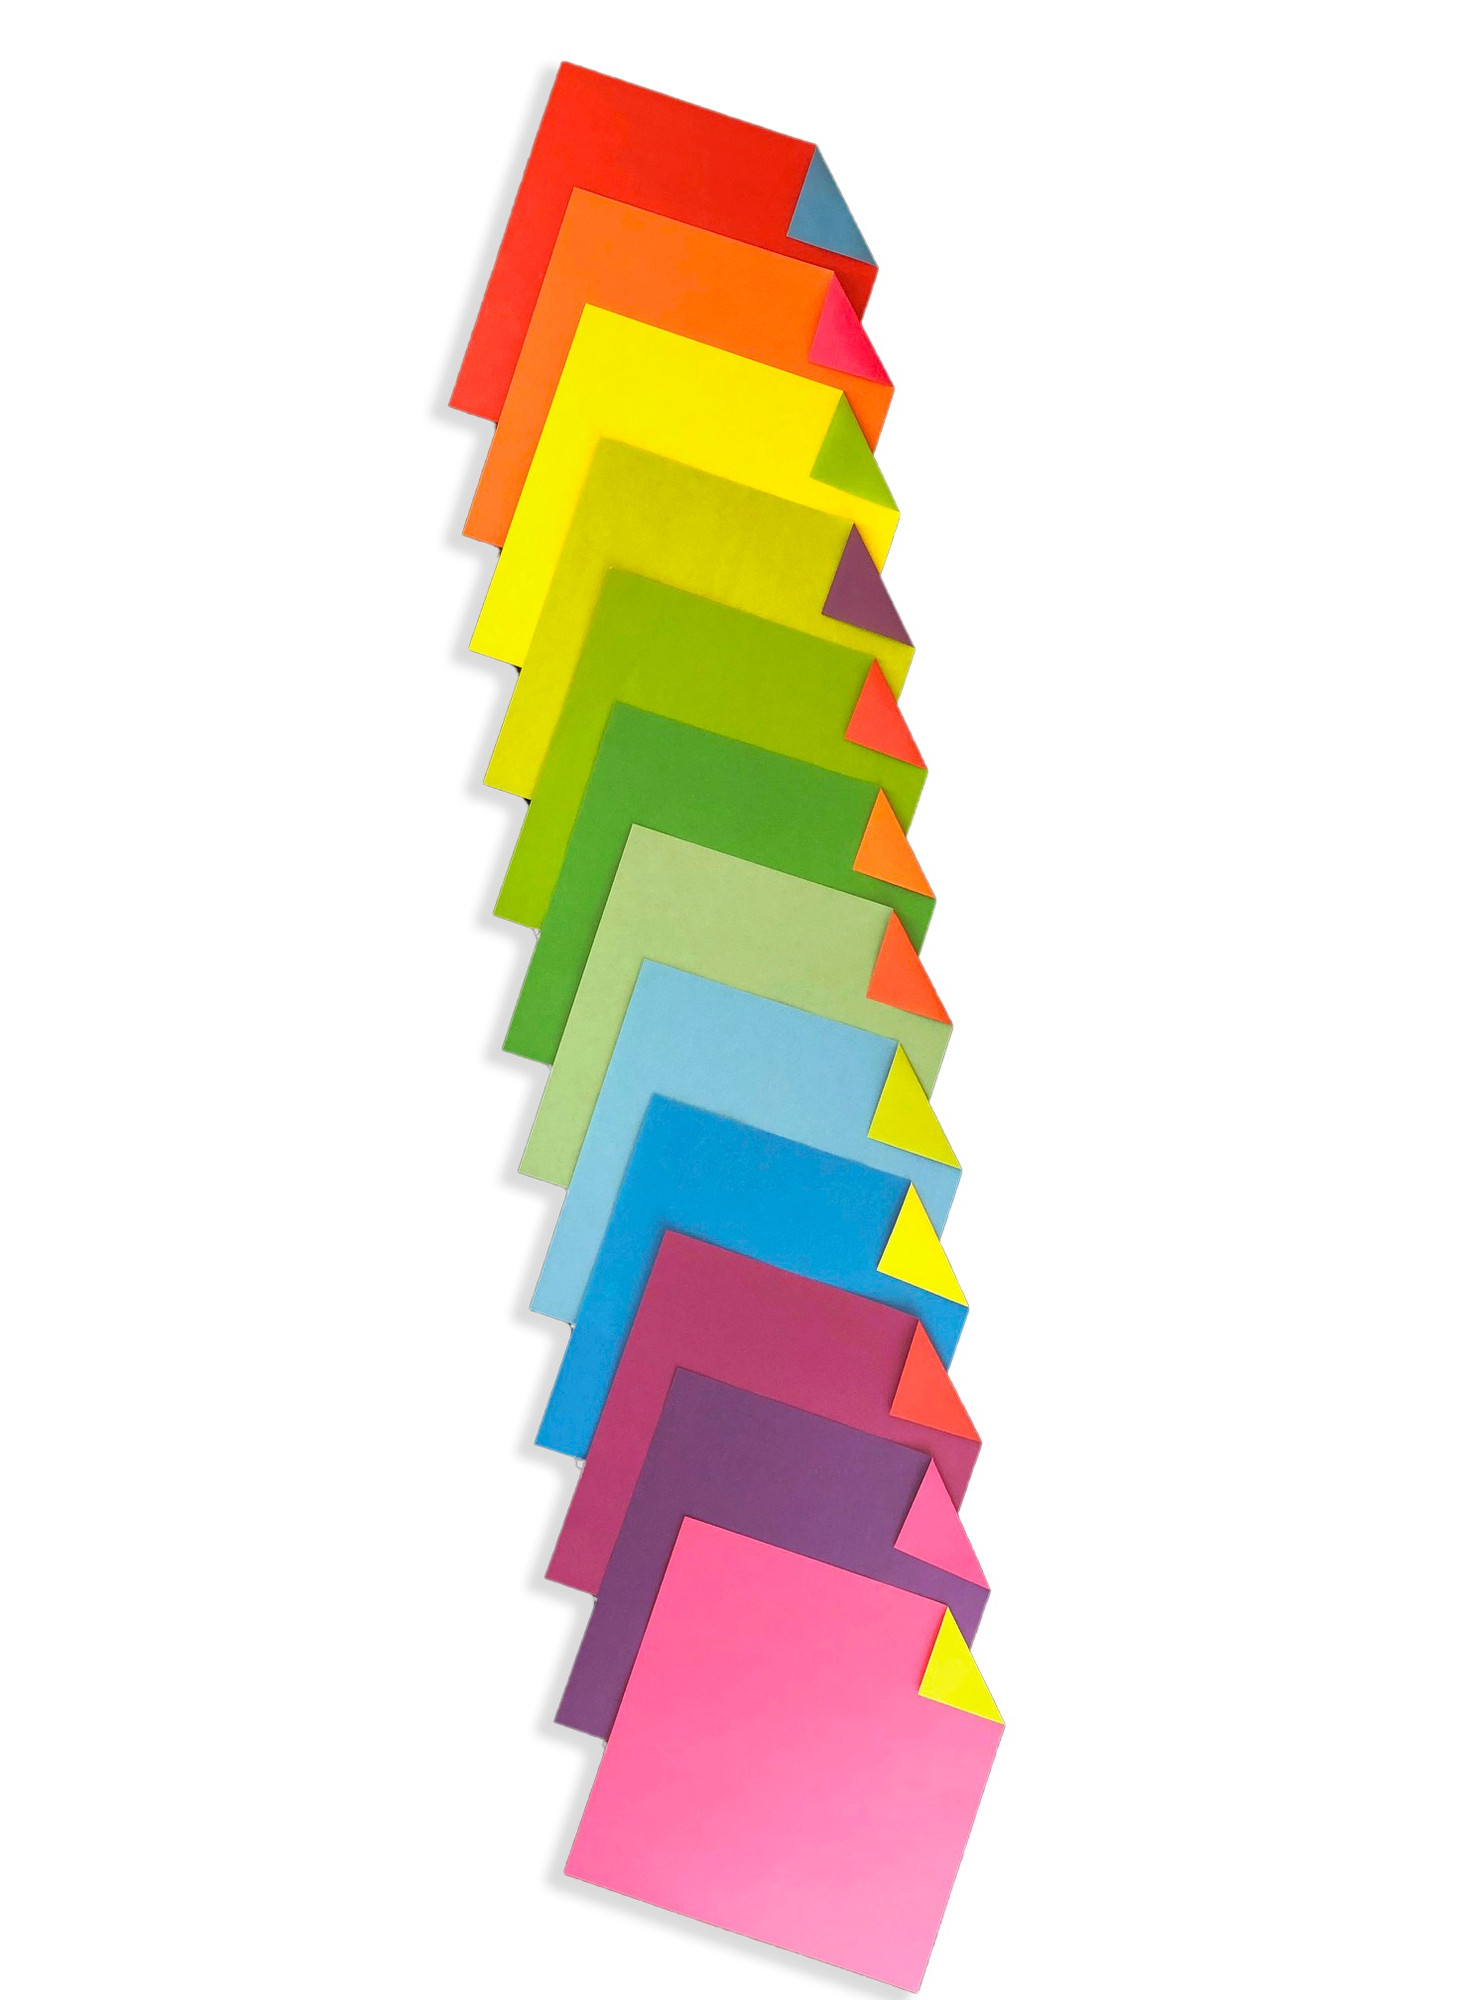 Origami Paper 500 sheets Rainbow Colors 4 (10 cm) (9780804852364) - Tuttle  Publishing